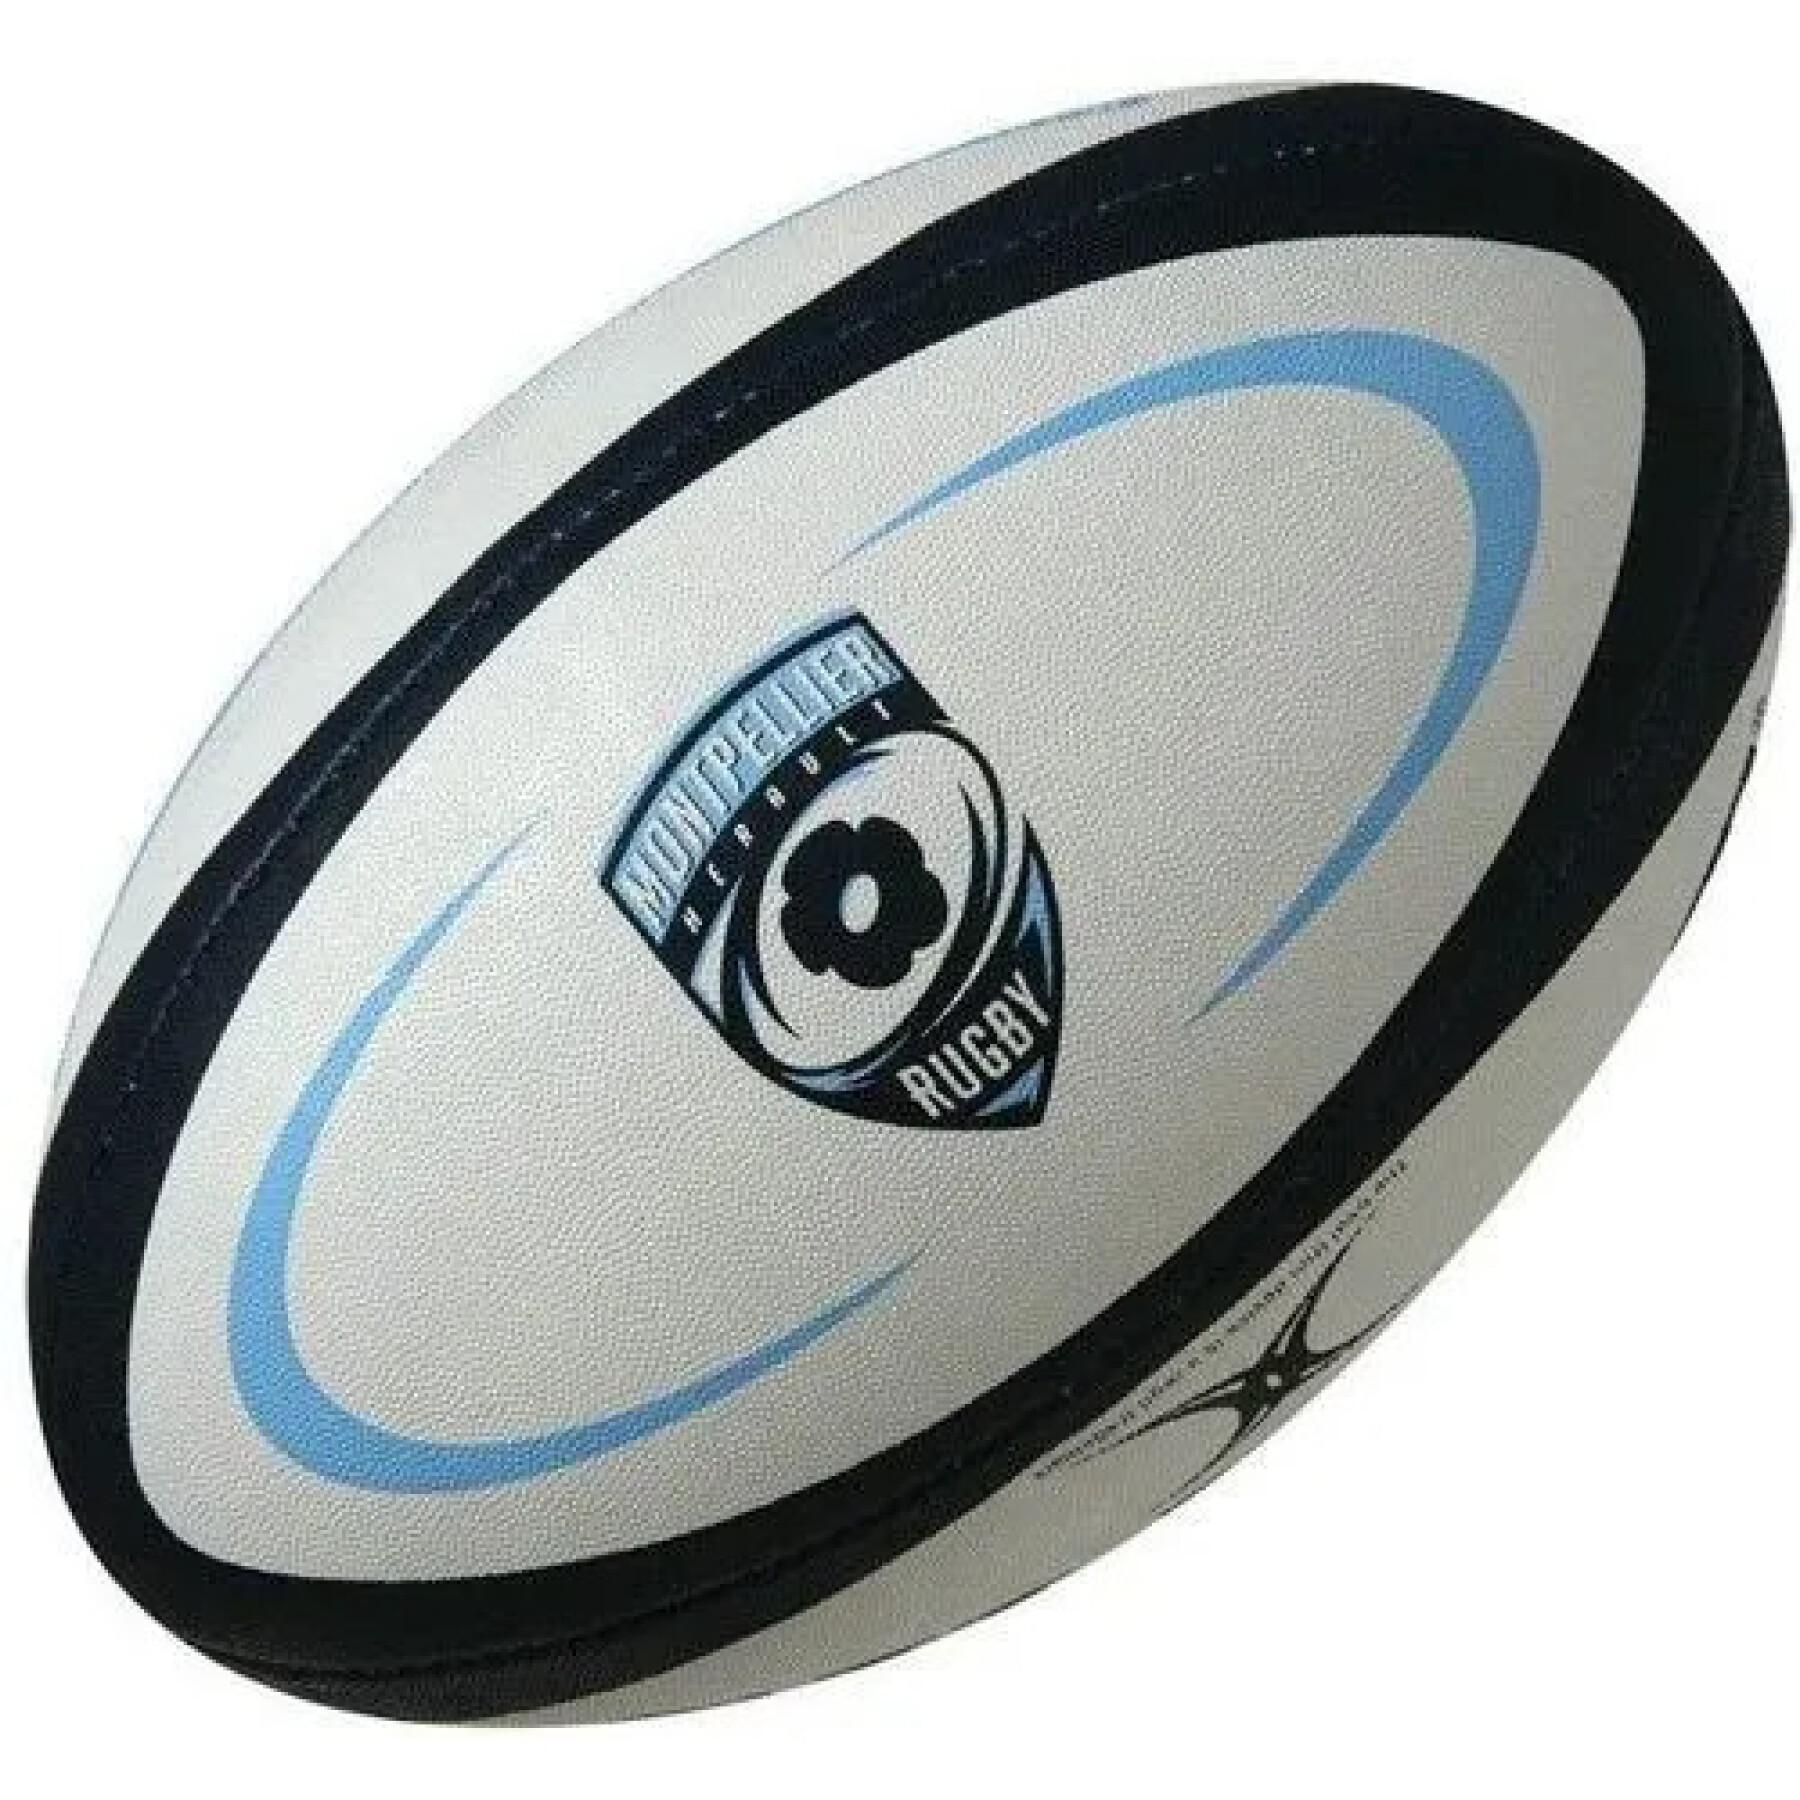 Rugbyball Gilbert Montpellier (Größe 5)